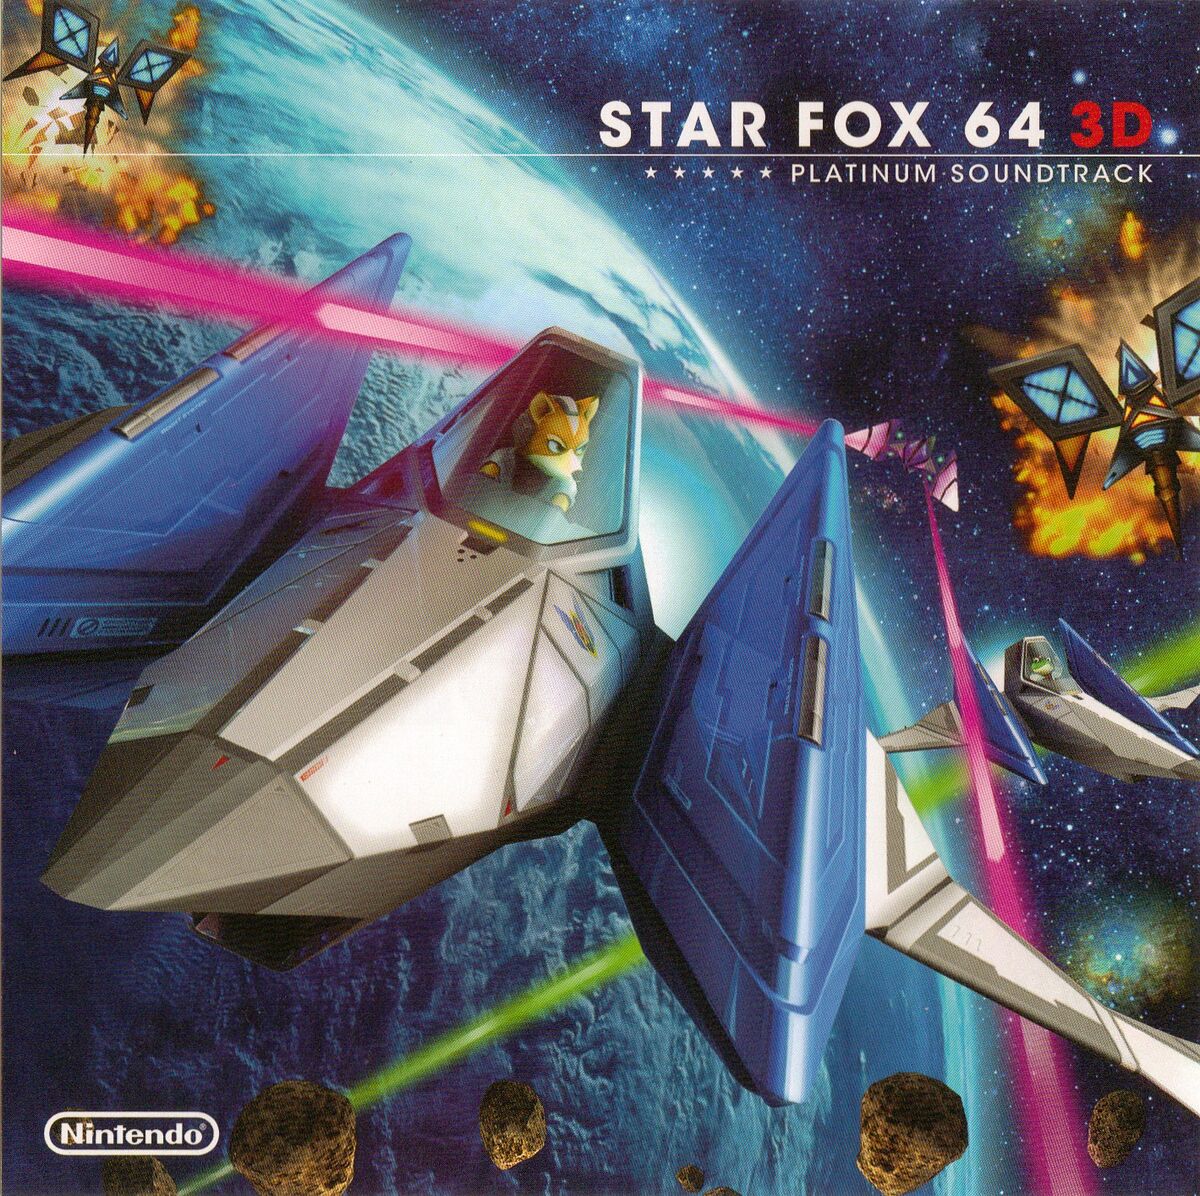 StarFox (Full OST) - SNES 